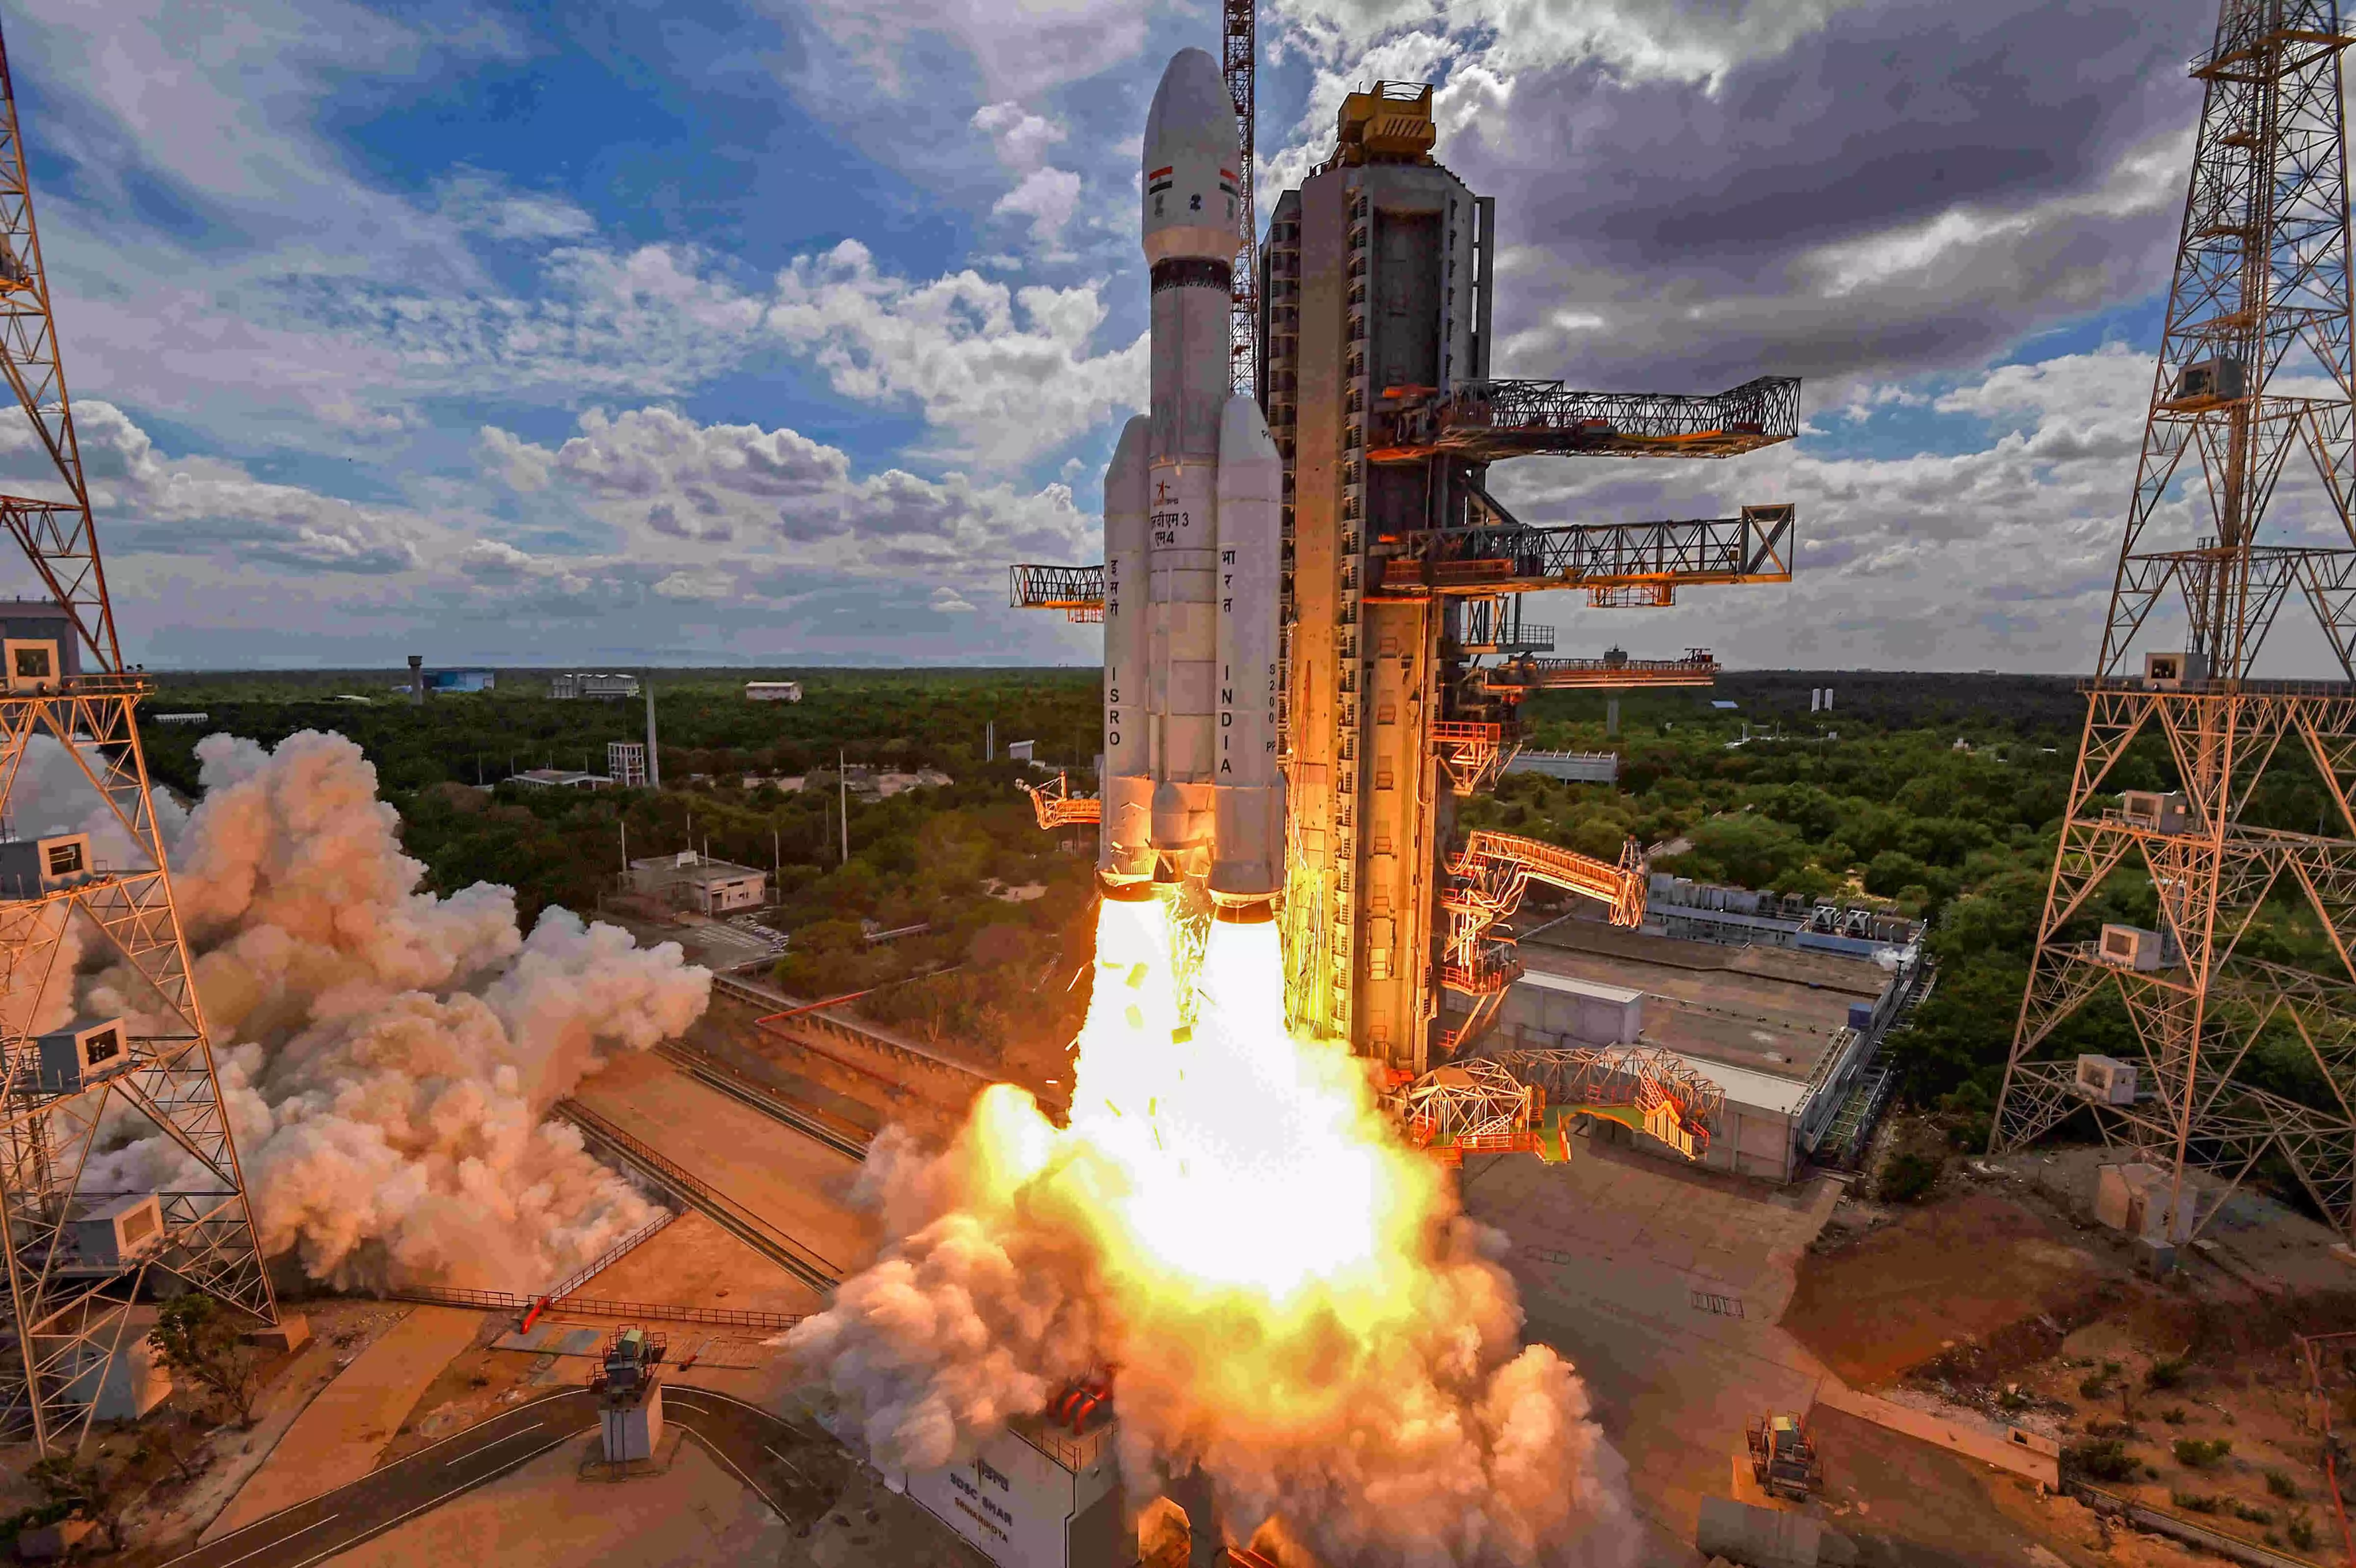 Major milestone: Cryogenic engine for Gaganyaan missions now human-rated, says ISRO